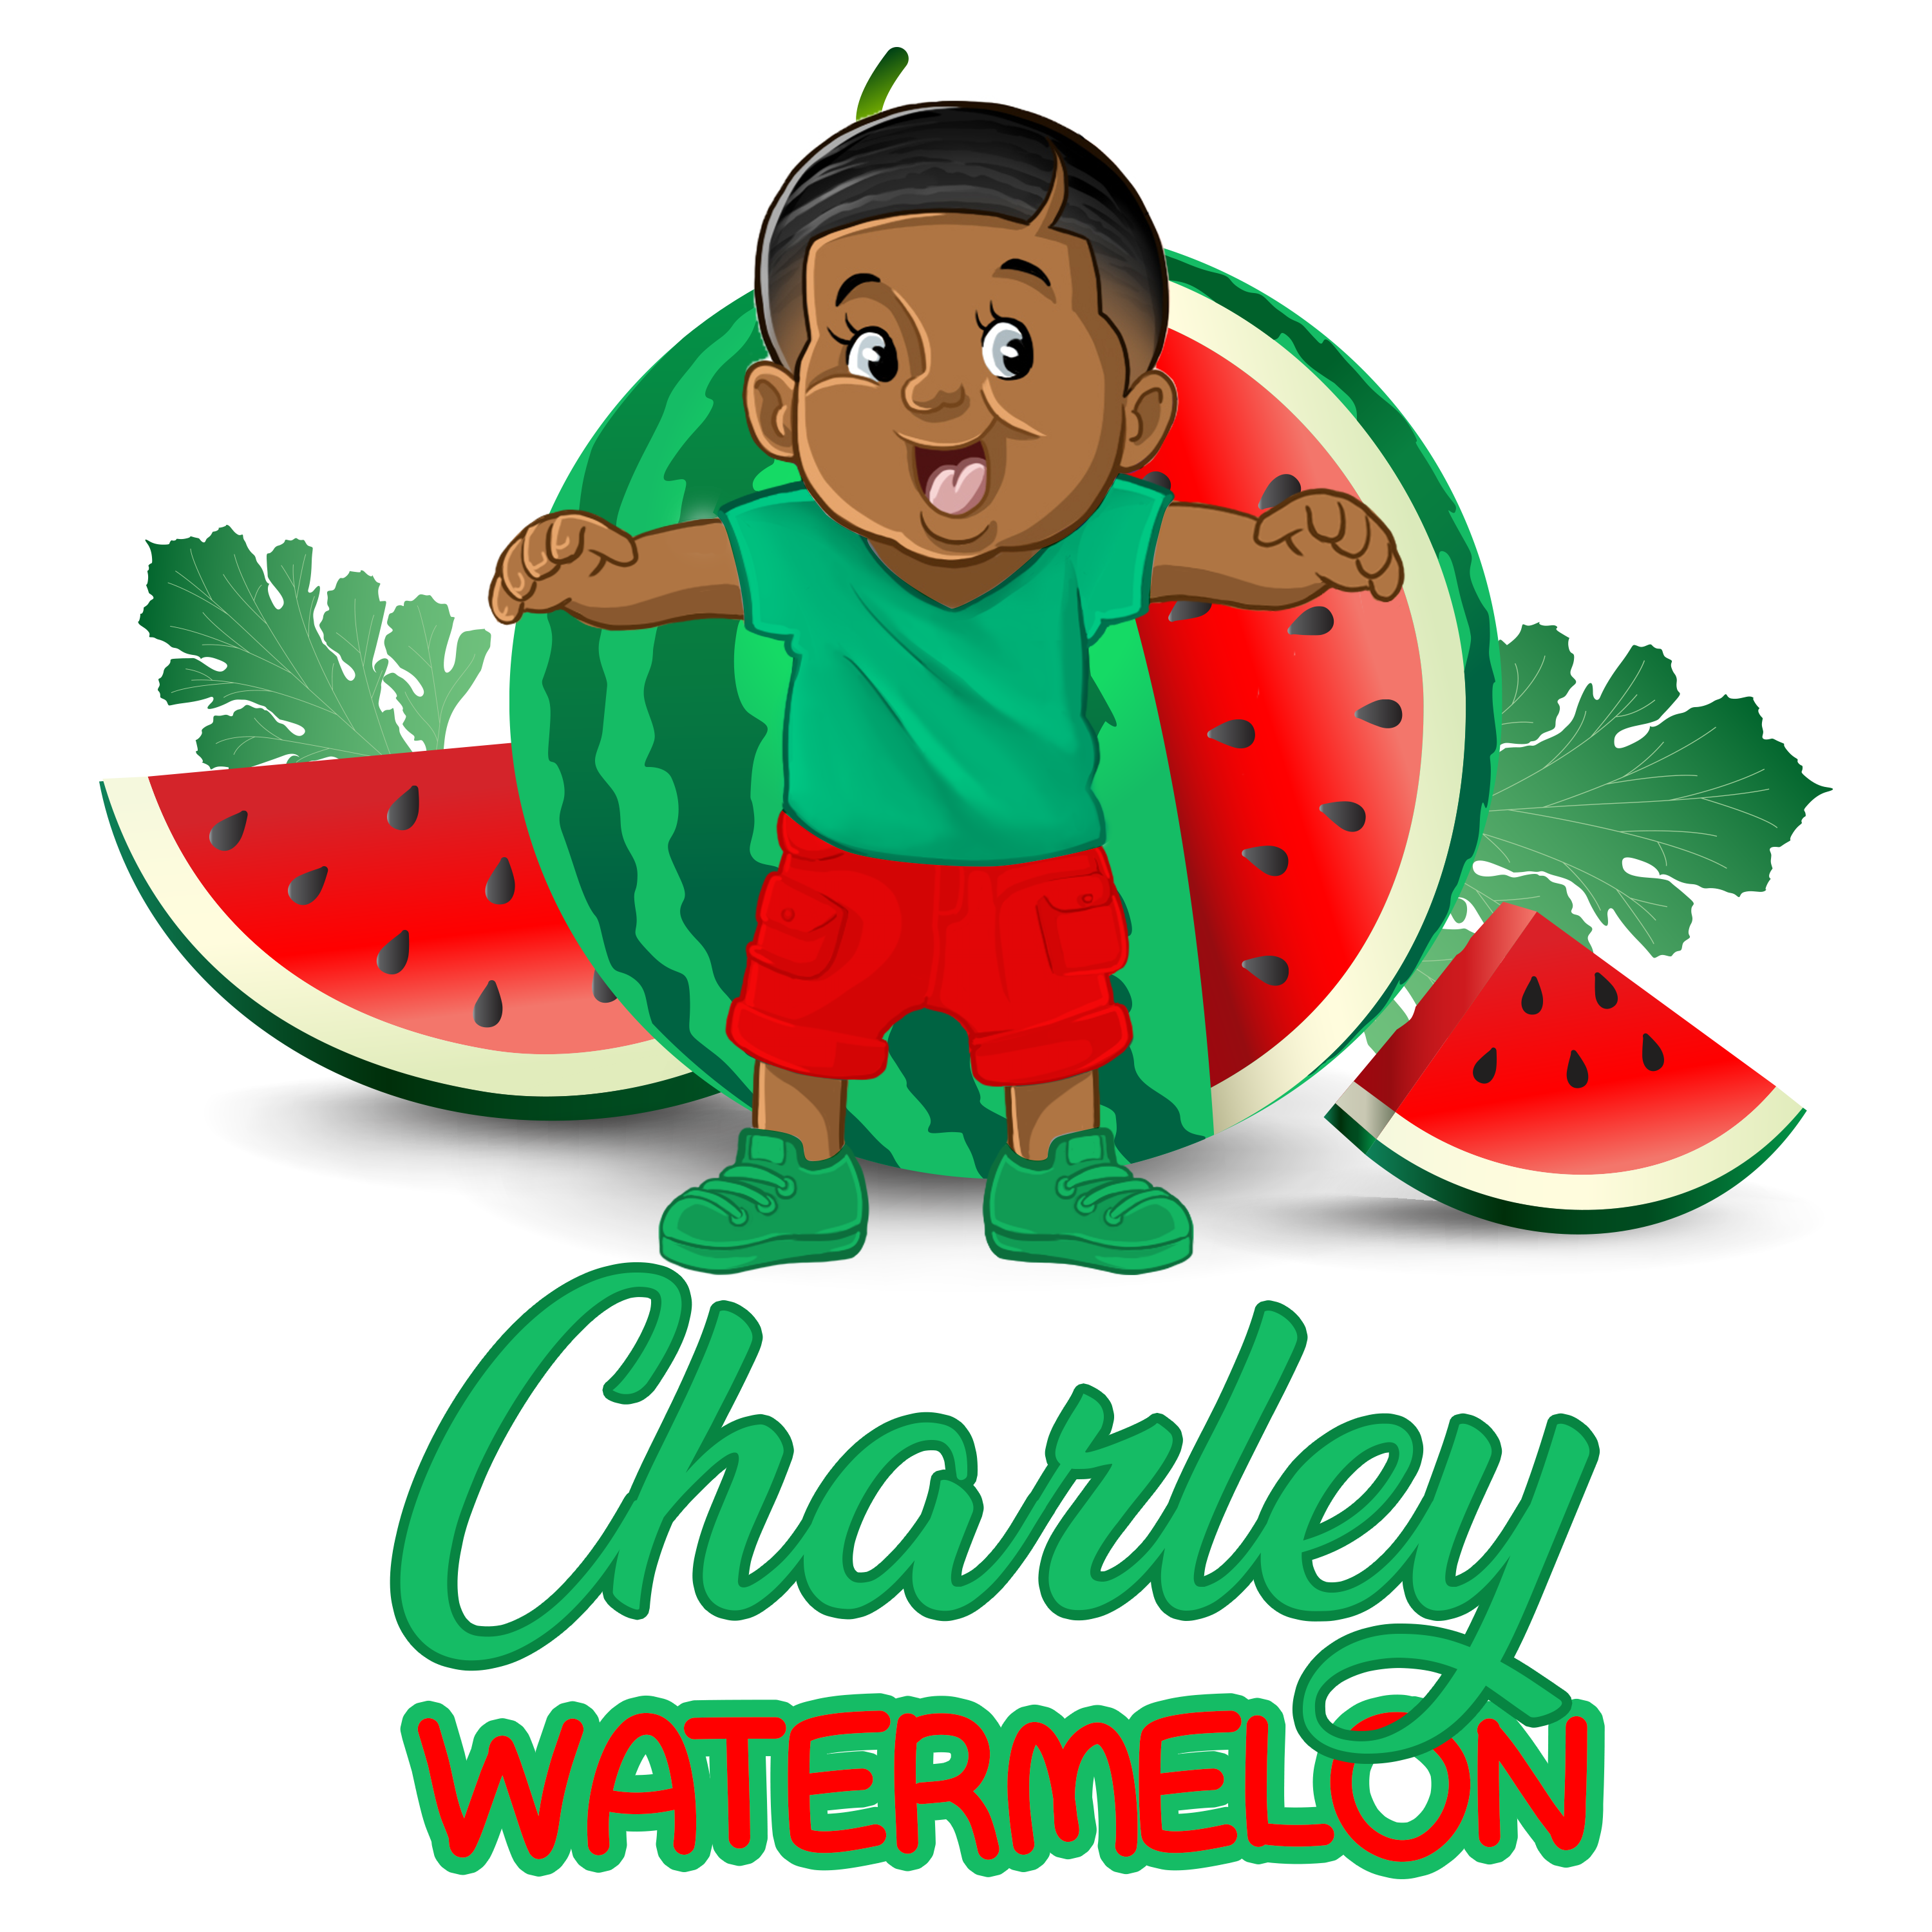 Charley Watermelon